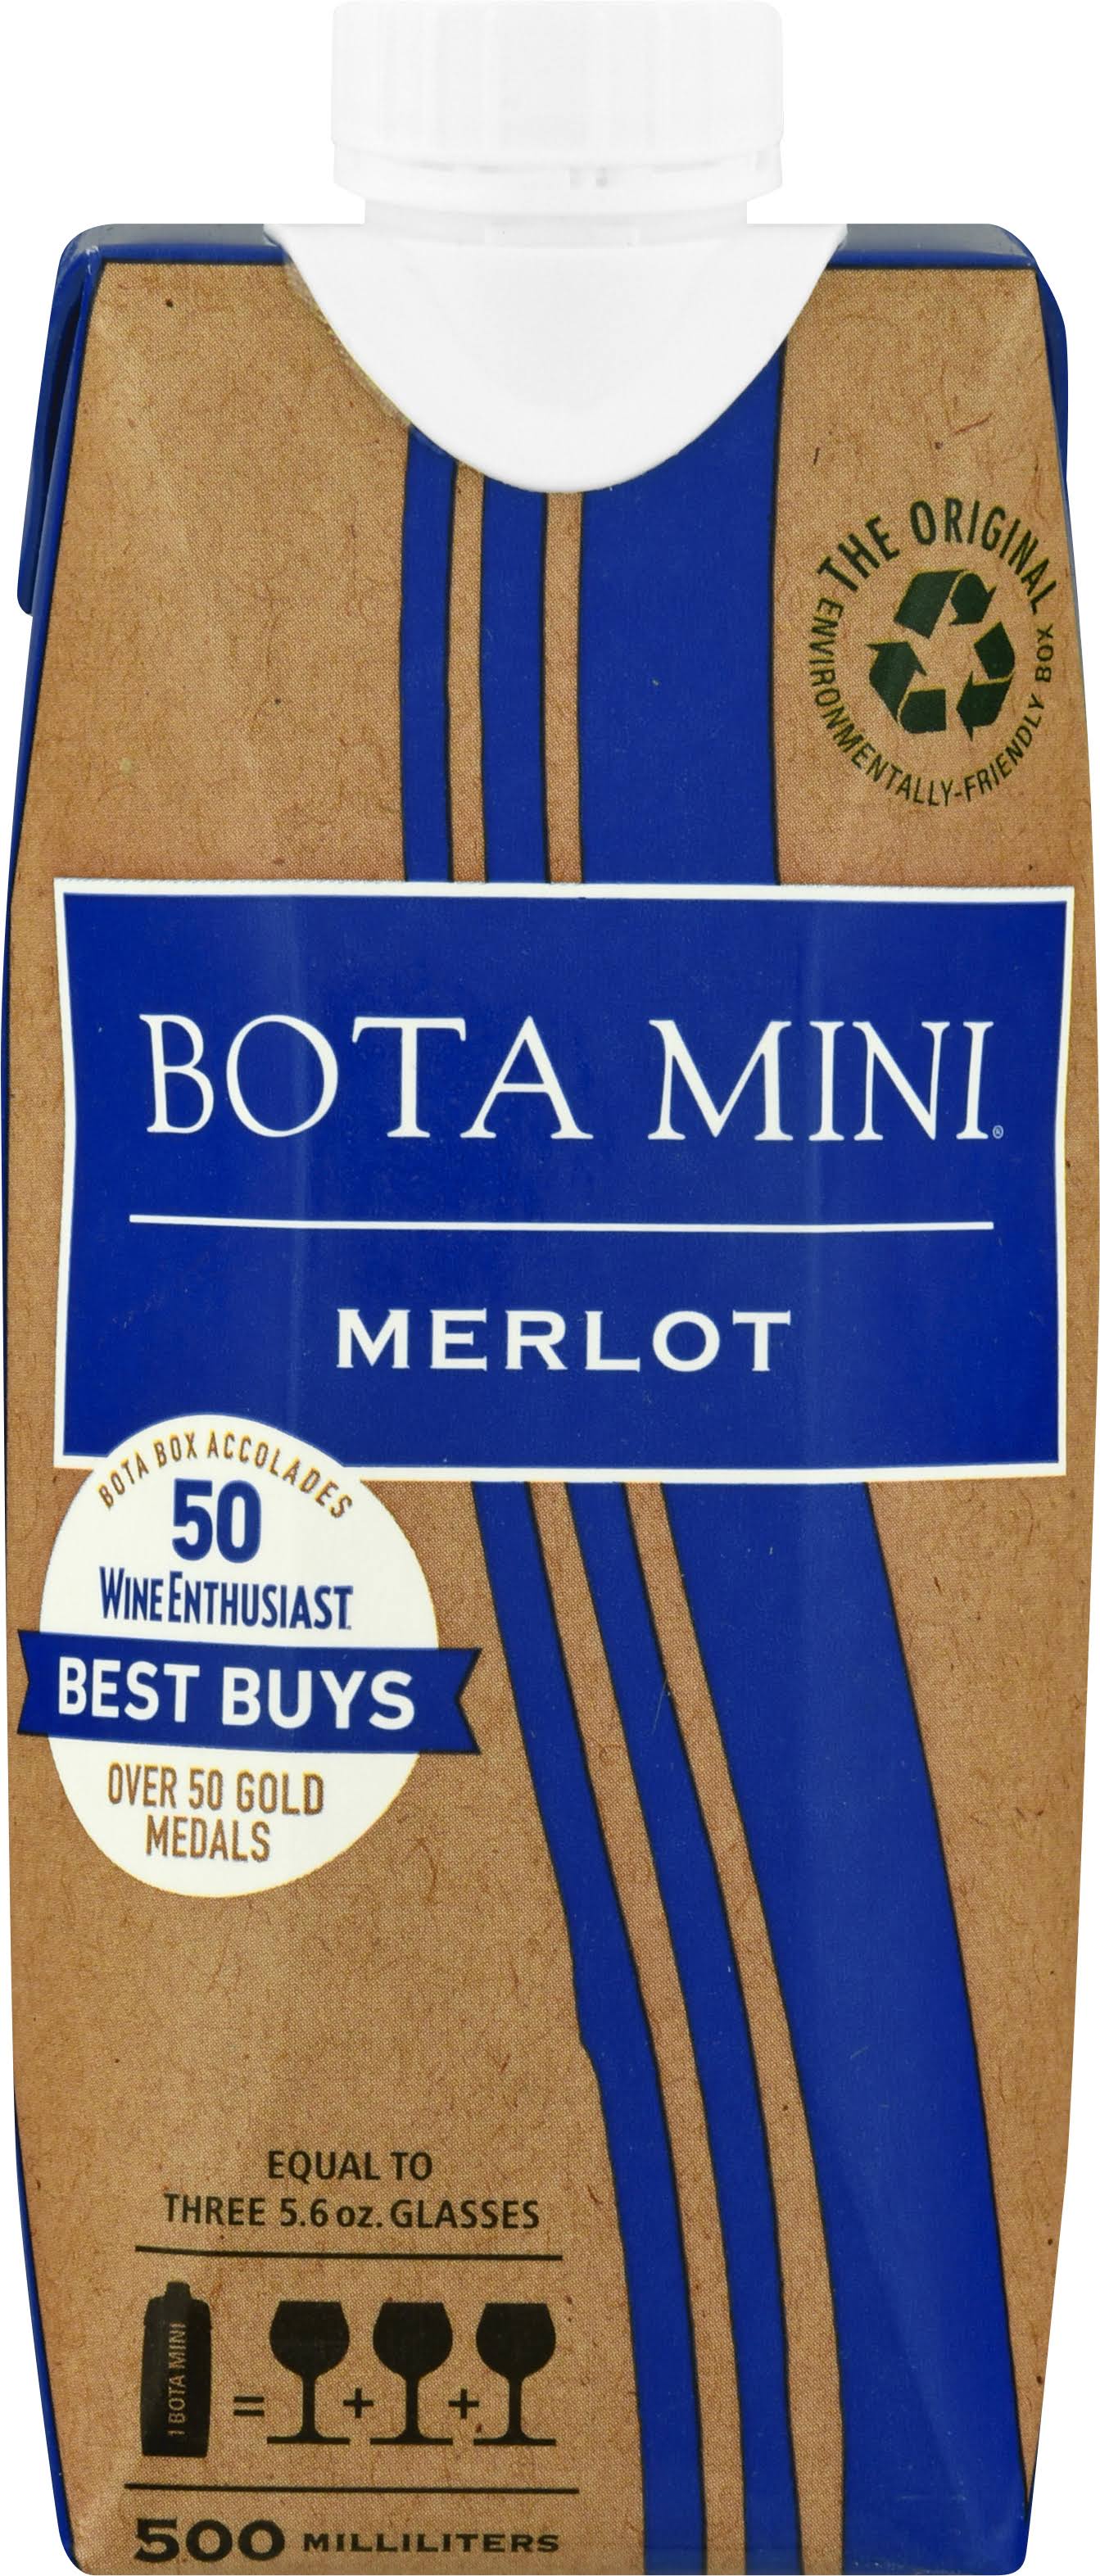 Bota Mini Merlot, California - 500 milliliters